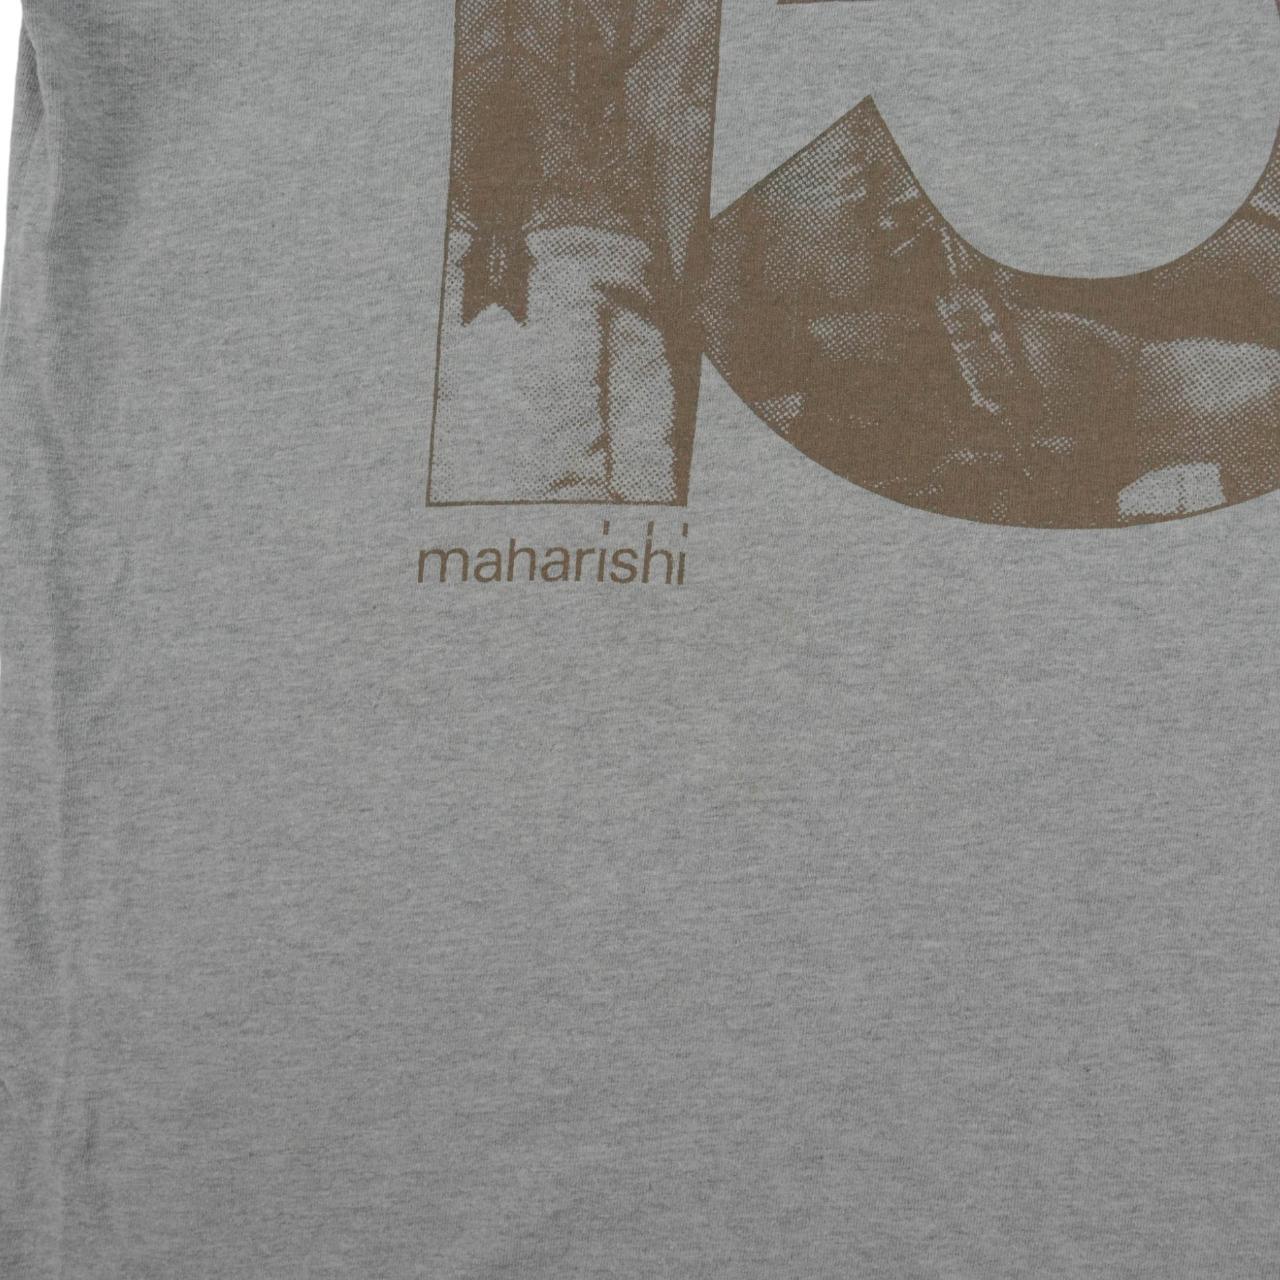 Maharishi T Shirt Size S - Known Source